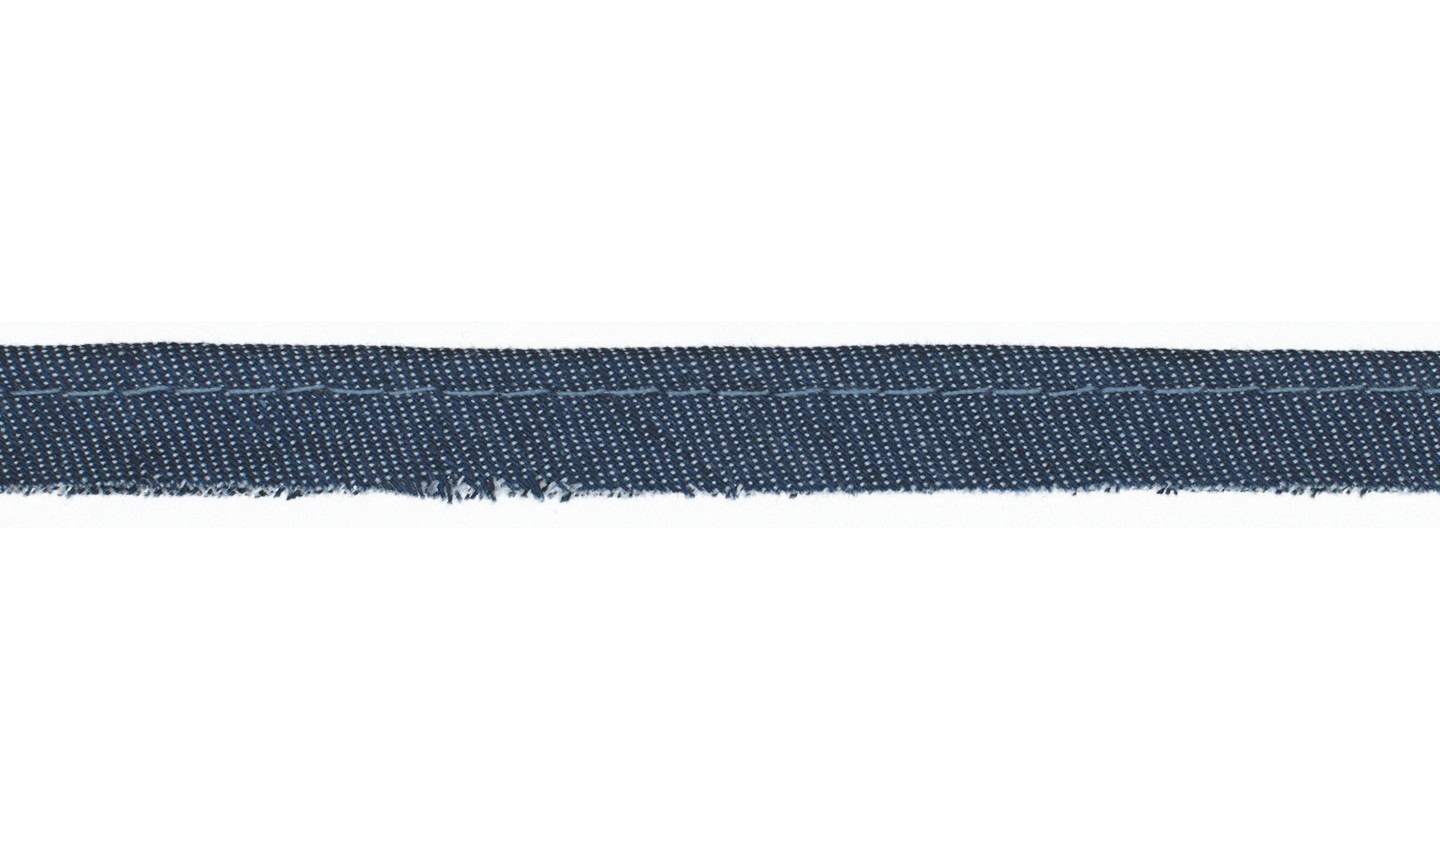 Paspelband Jeans uni dunkel jeansblau 10mm (503)  